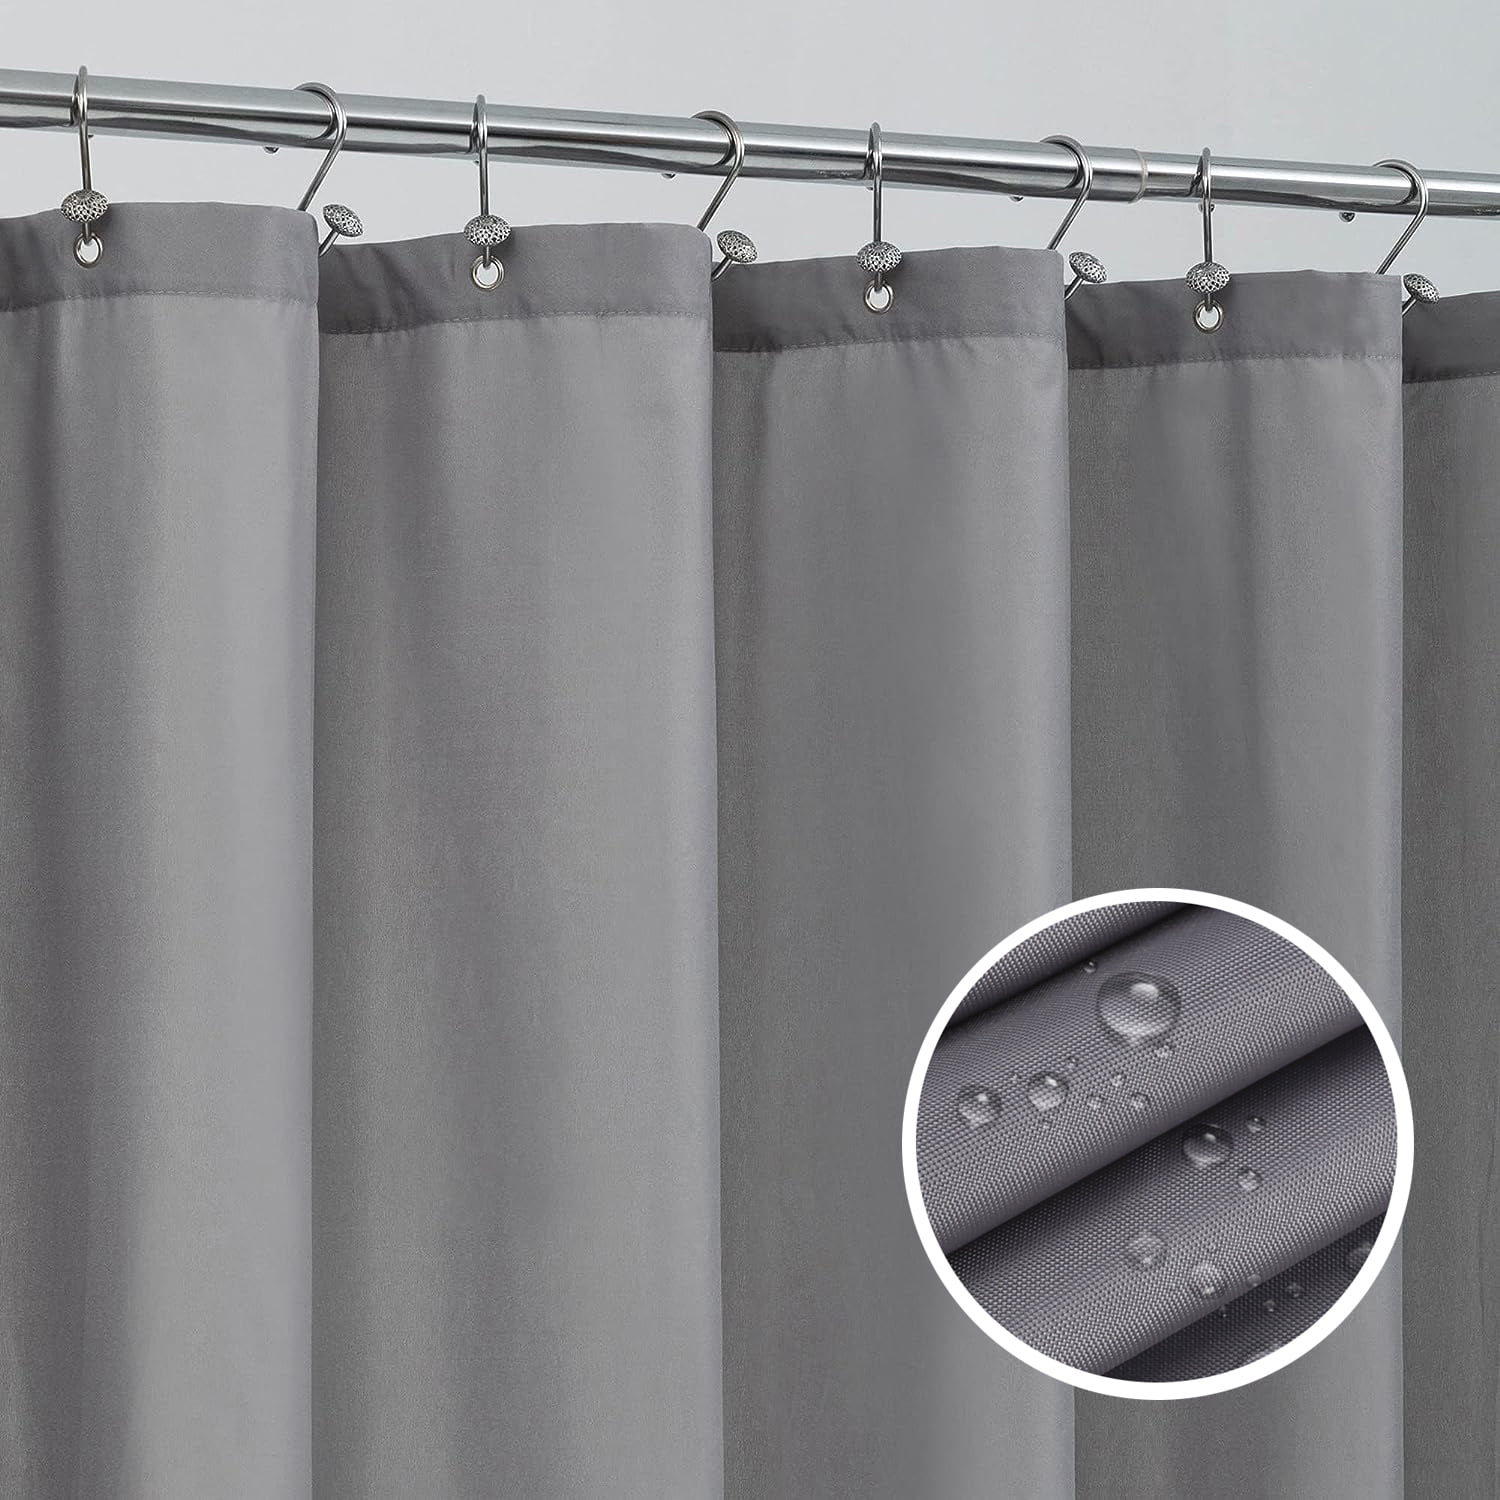 NEWEEN Shower Curtain 72 x 90 Polyester Waterproof Heavy Duty